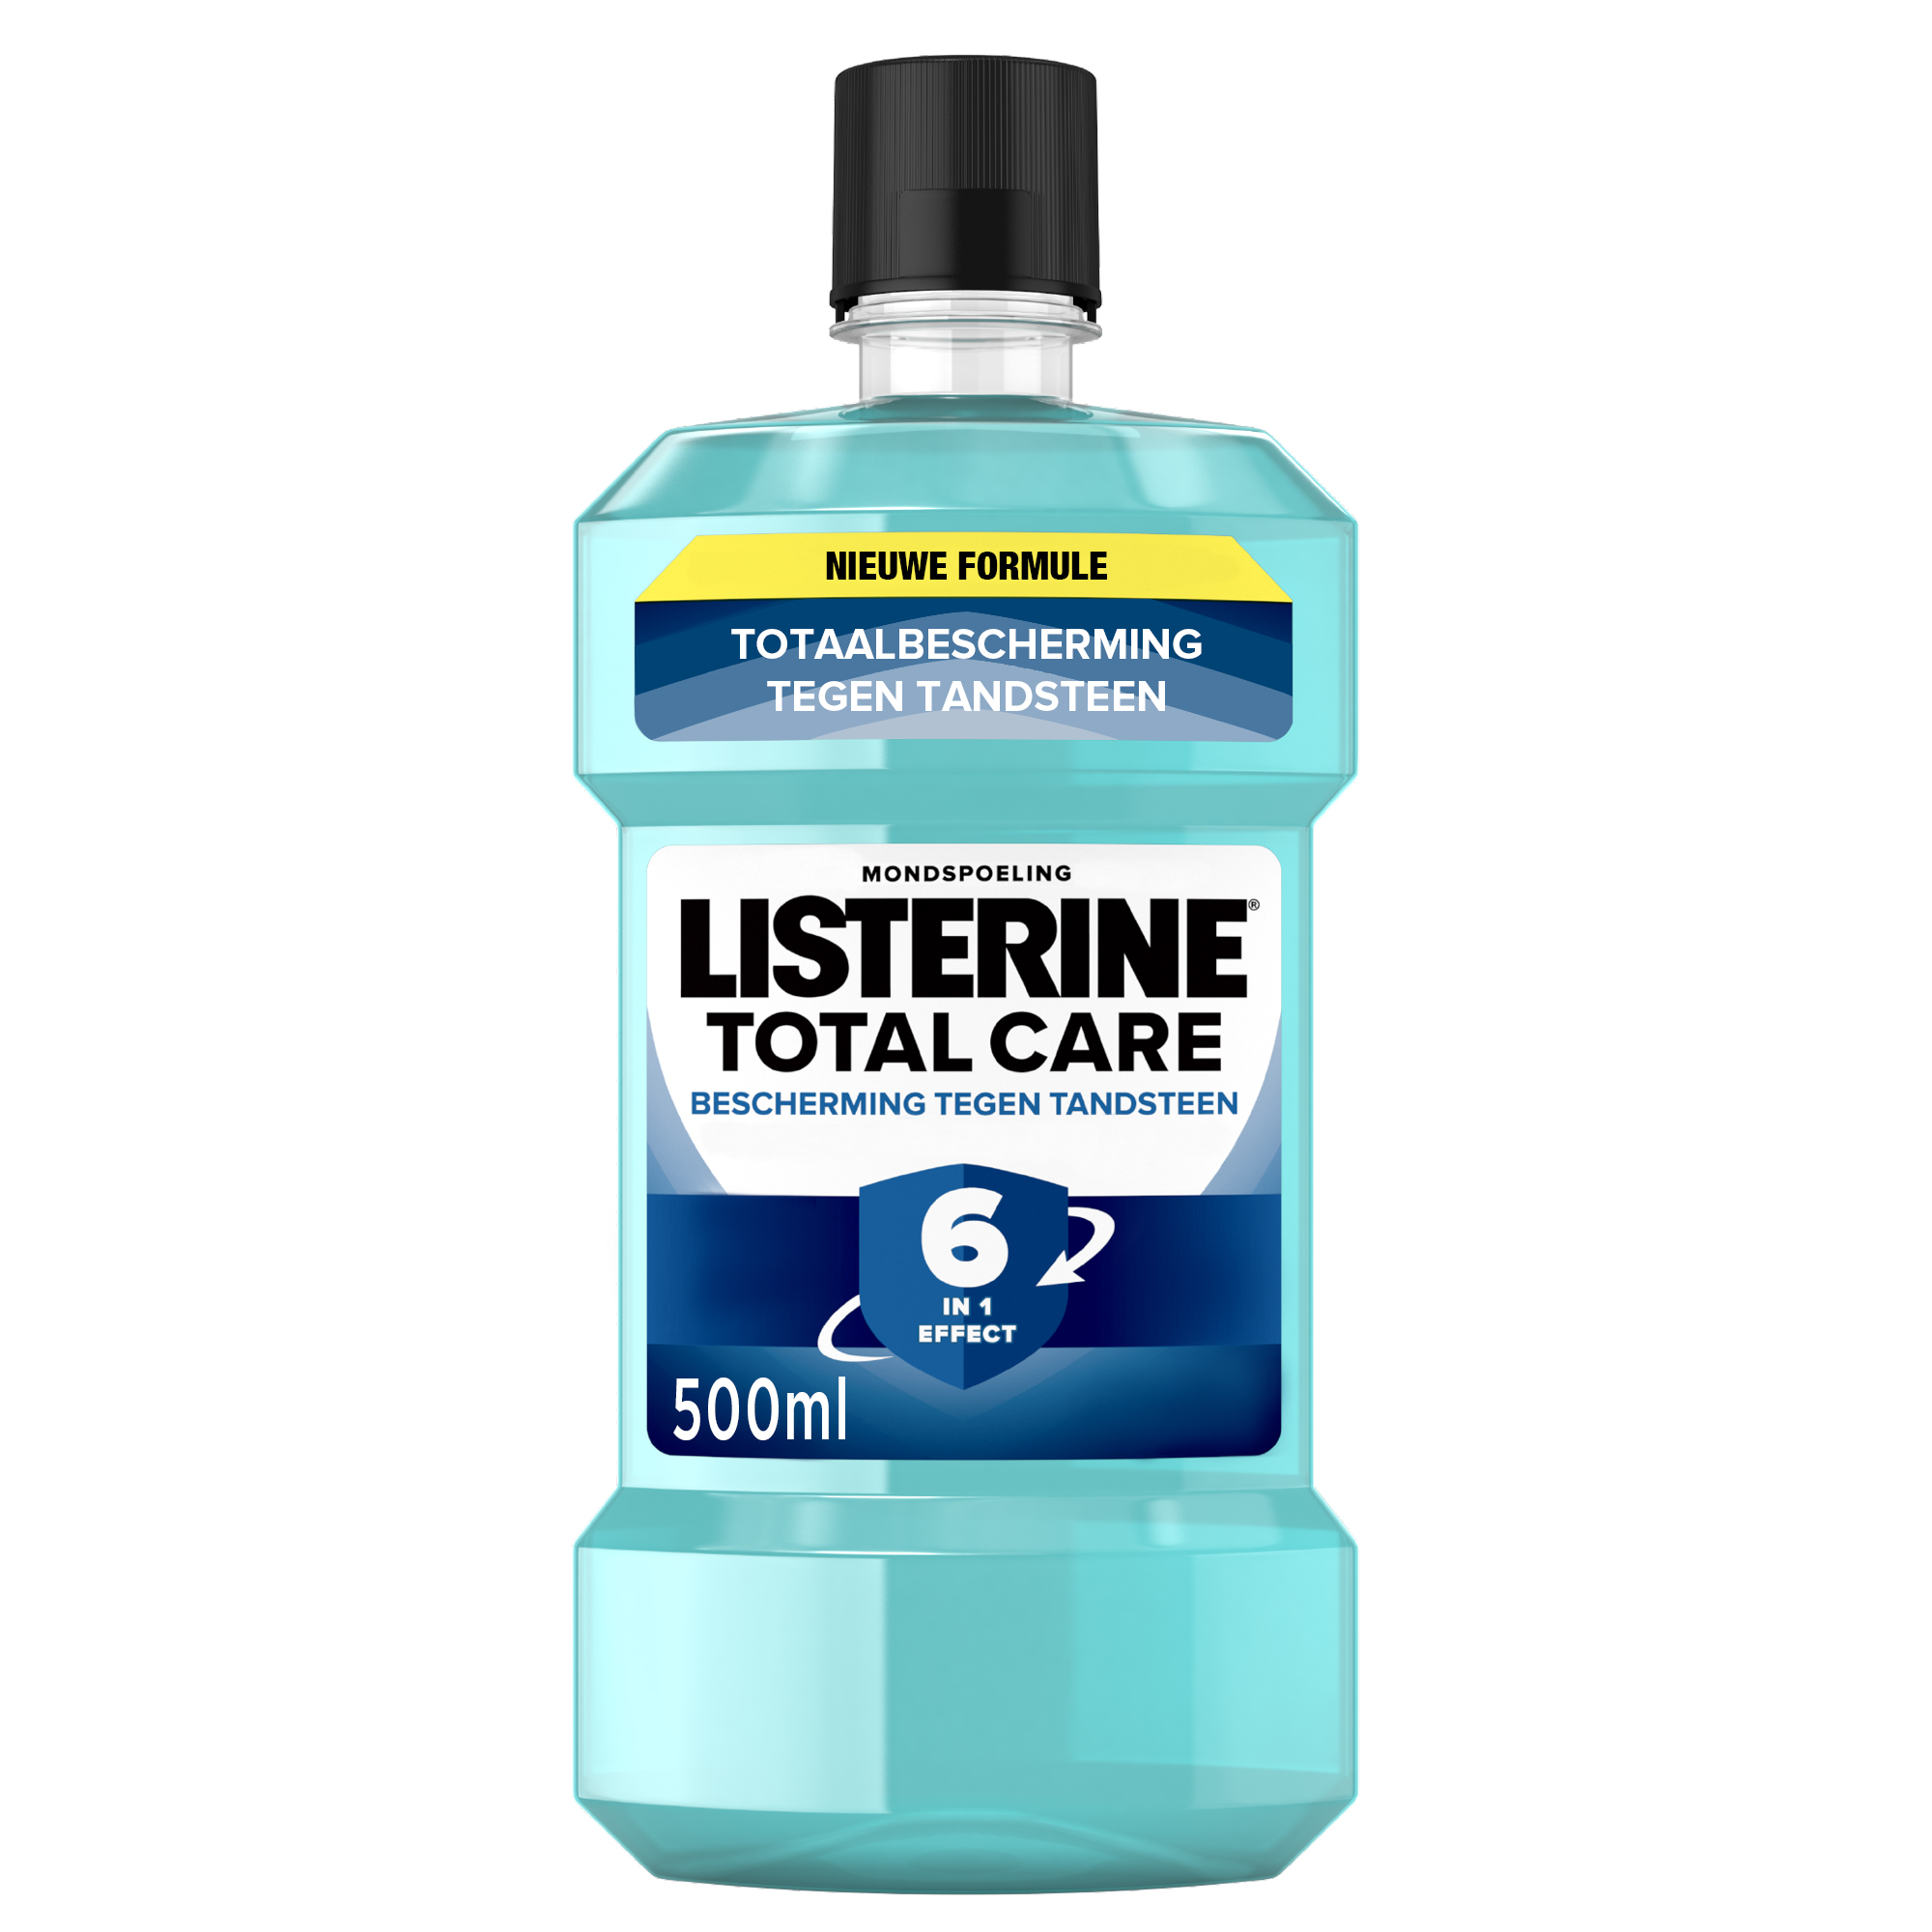 Listerine Total Care Anti-Tandsteen Mondspoeling